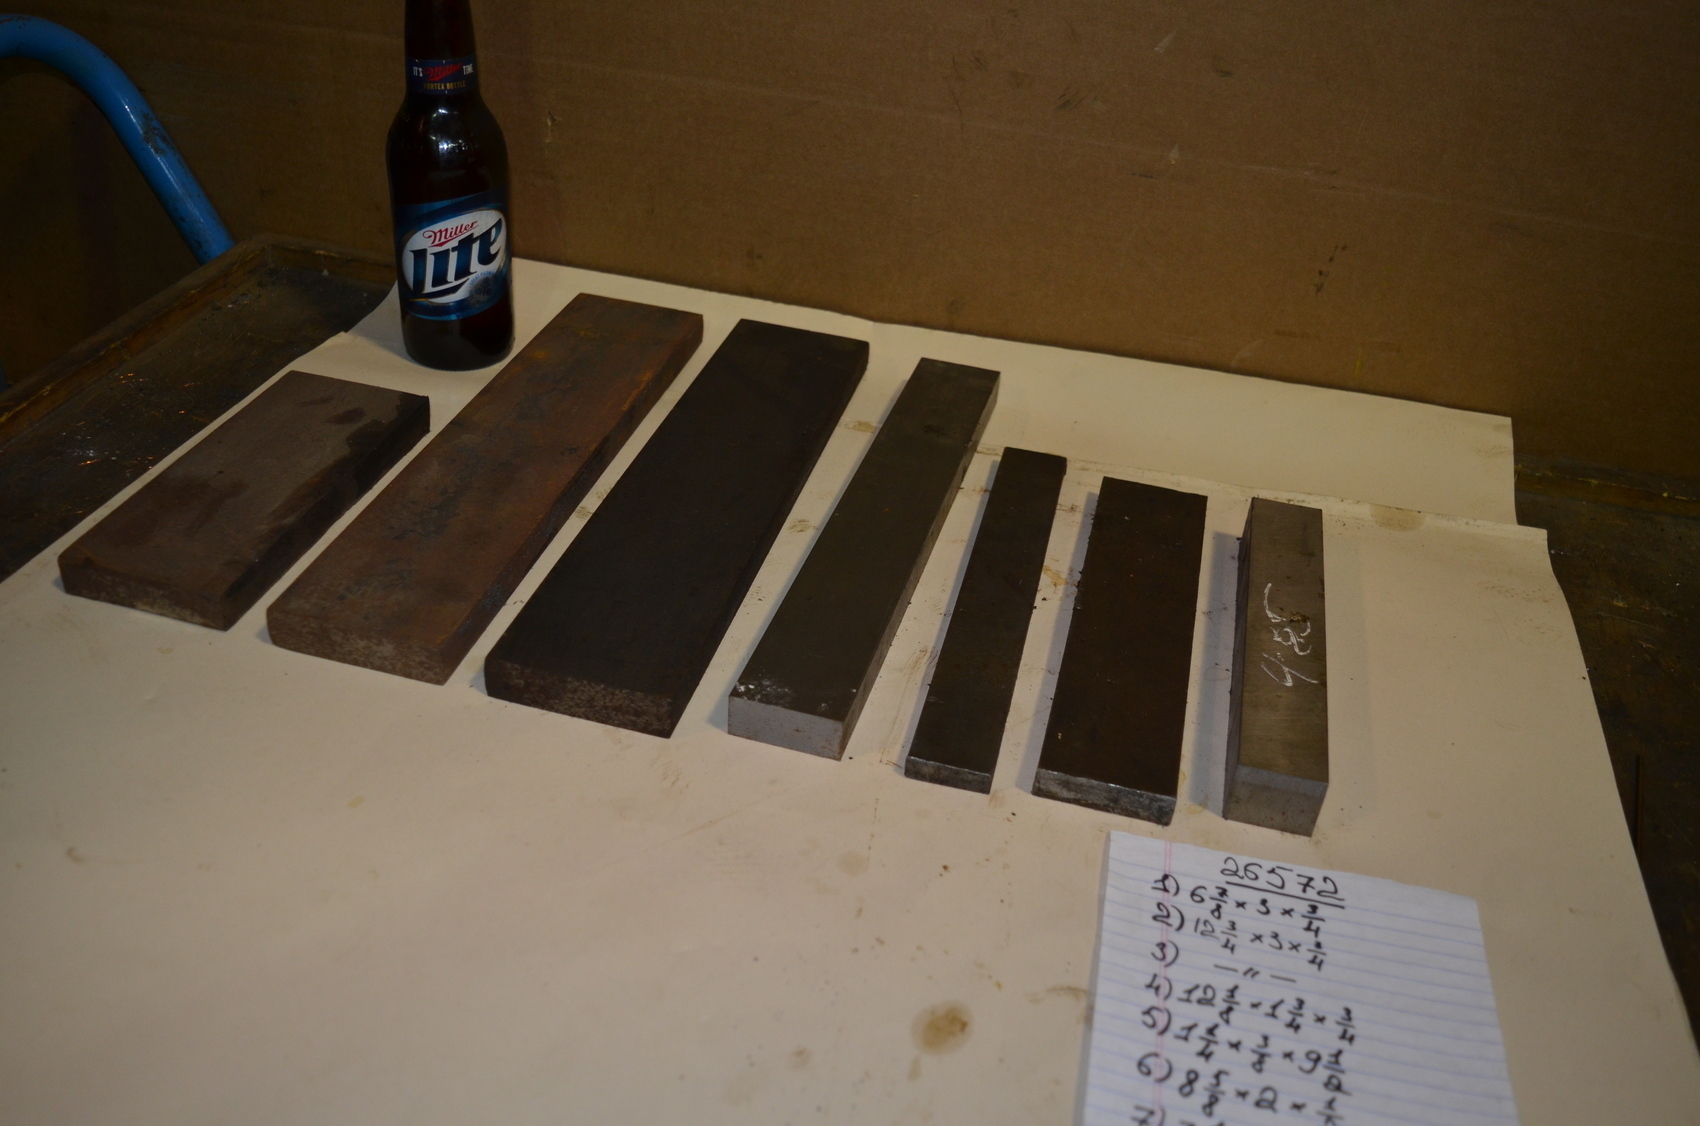 Lot of 7 steel Rectangular Bar for blacksmith anvil,32 lbs